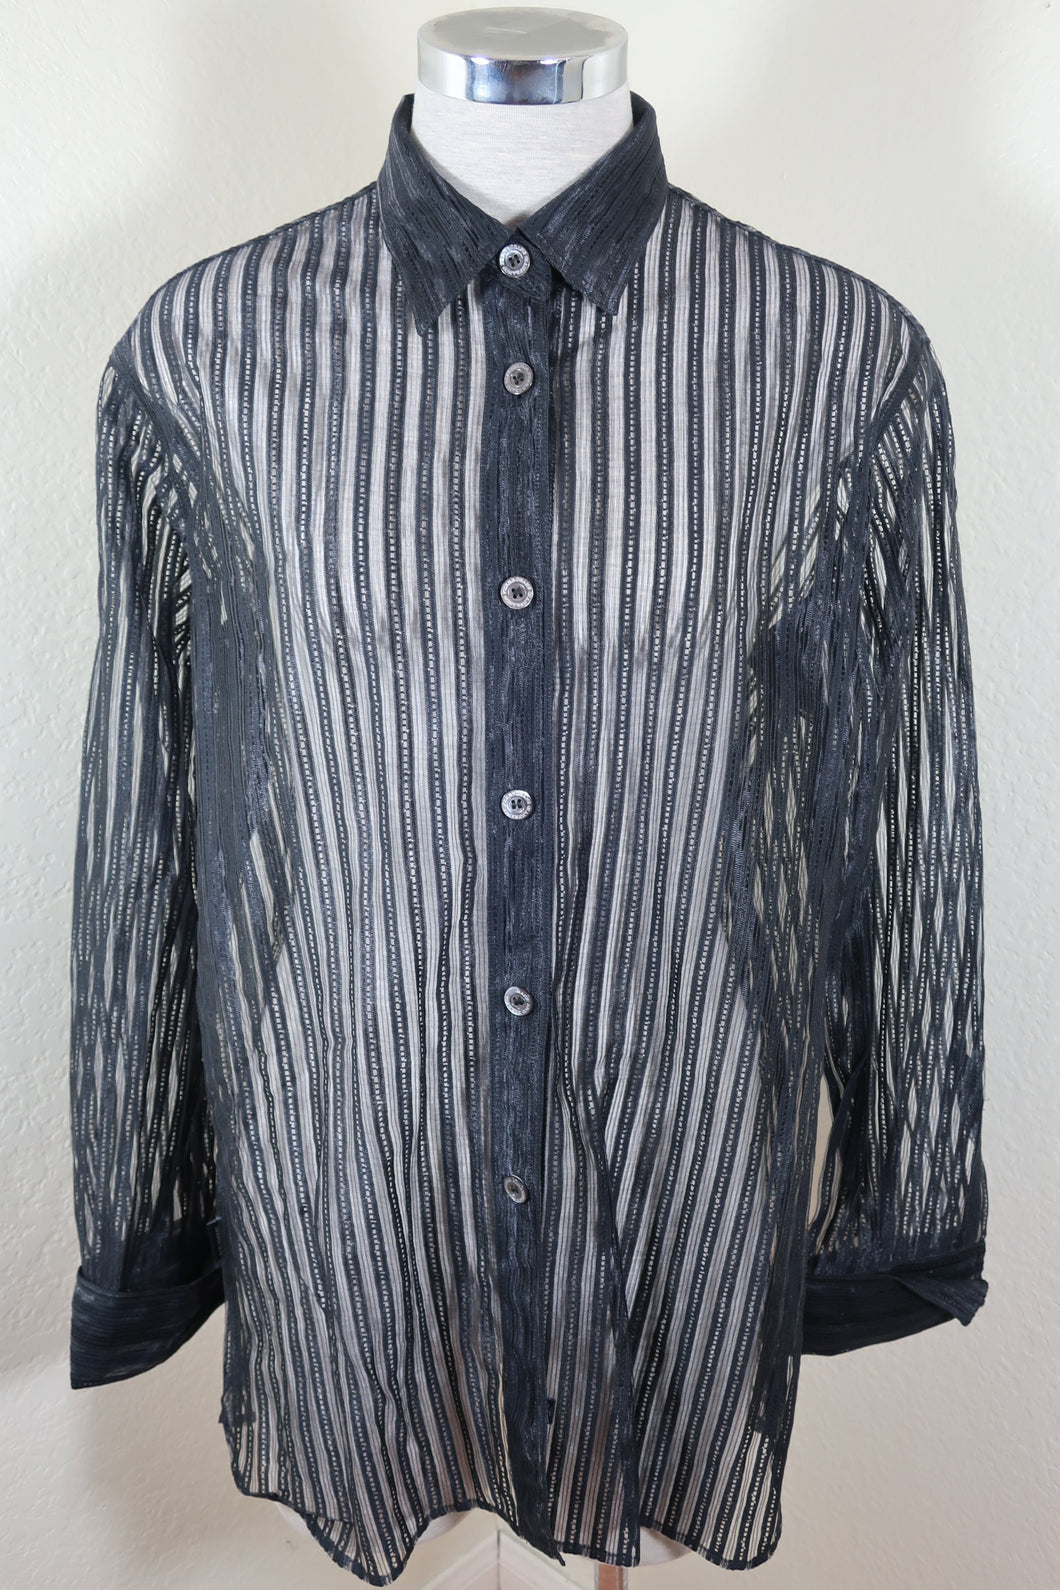 Vintage GIANFRANCO FERRE Black Mesh See Through Long Sleeve Top Blouse Shirt Medium M5 6 7